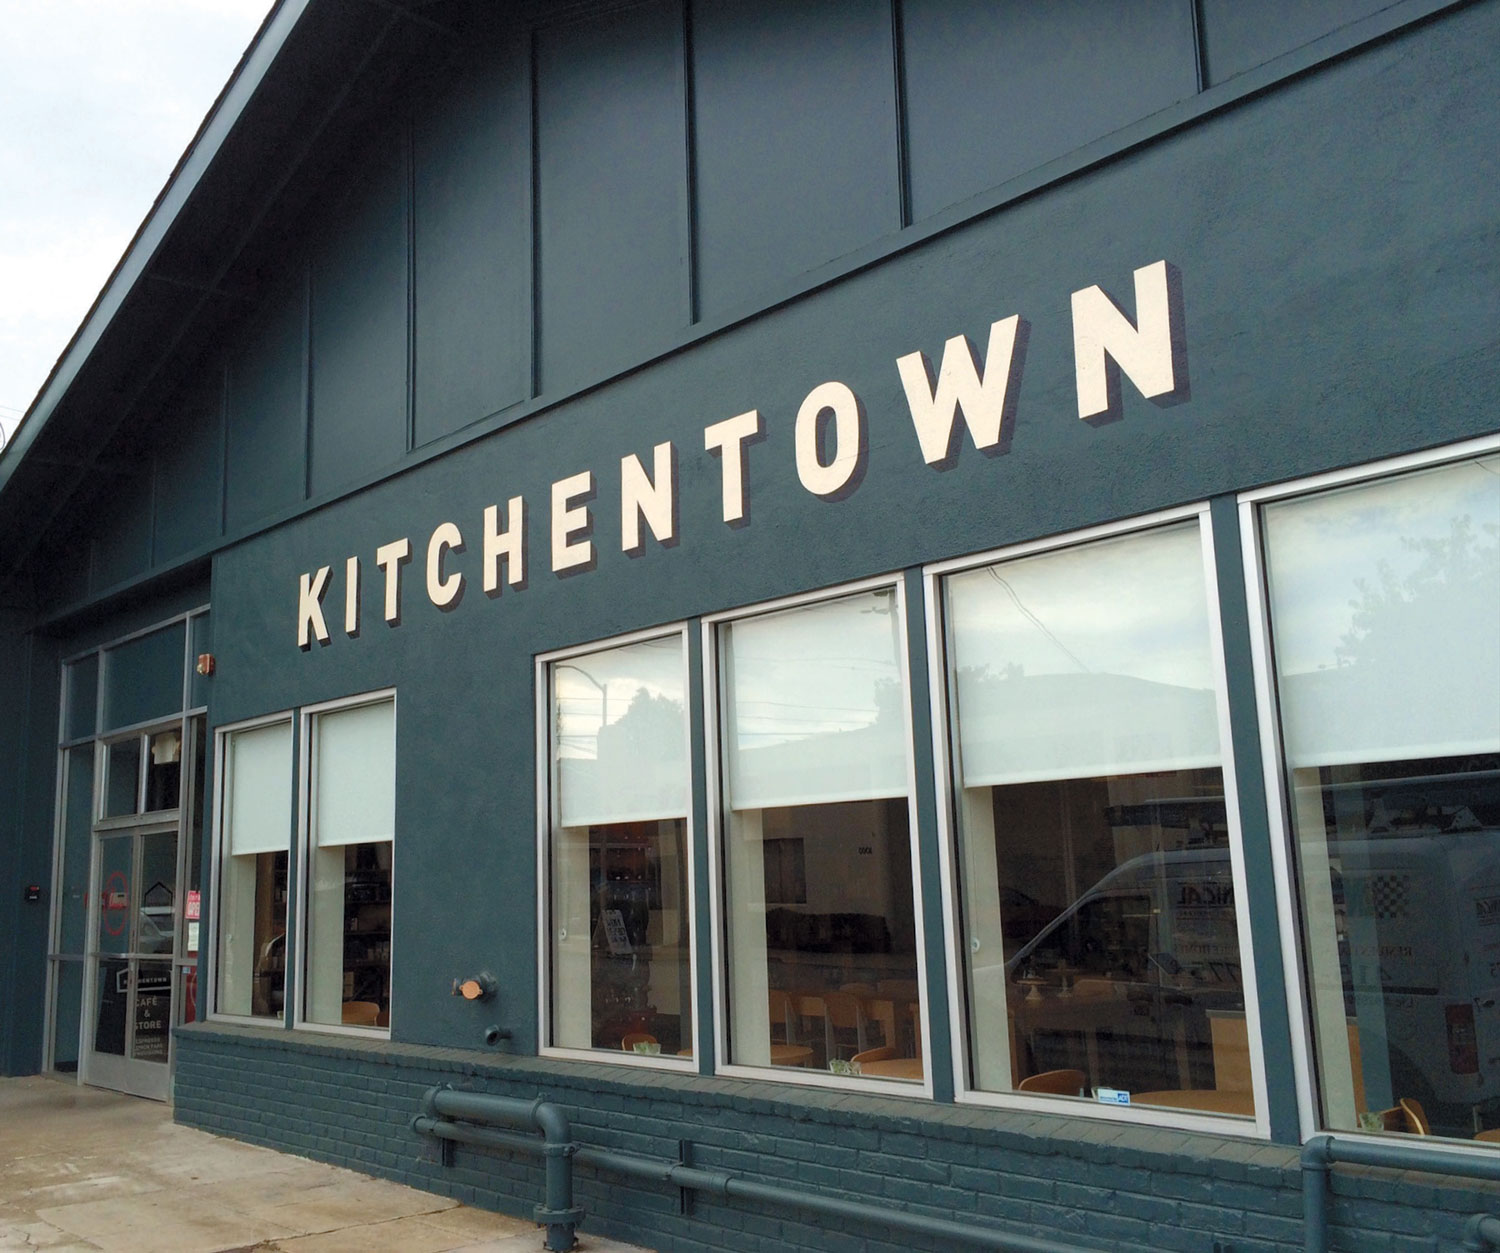 Kitchentown 1 